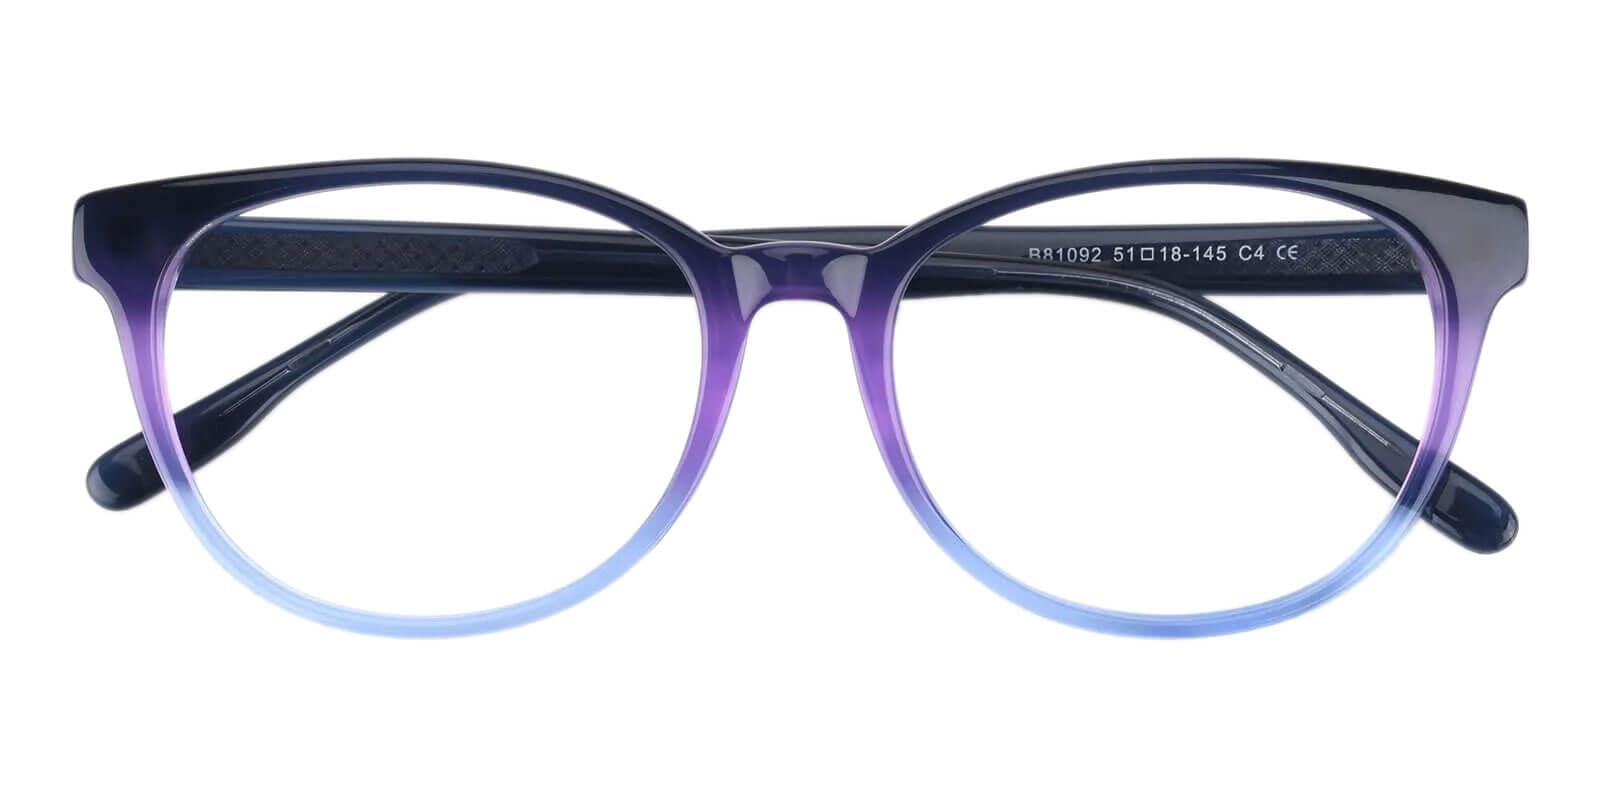 Bouquet Blue Acetate Eyeglasses , SpringHinges , UniversalBridgeFit Frames from ABBE Glasses